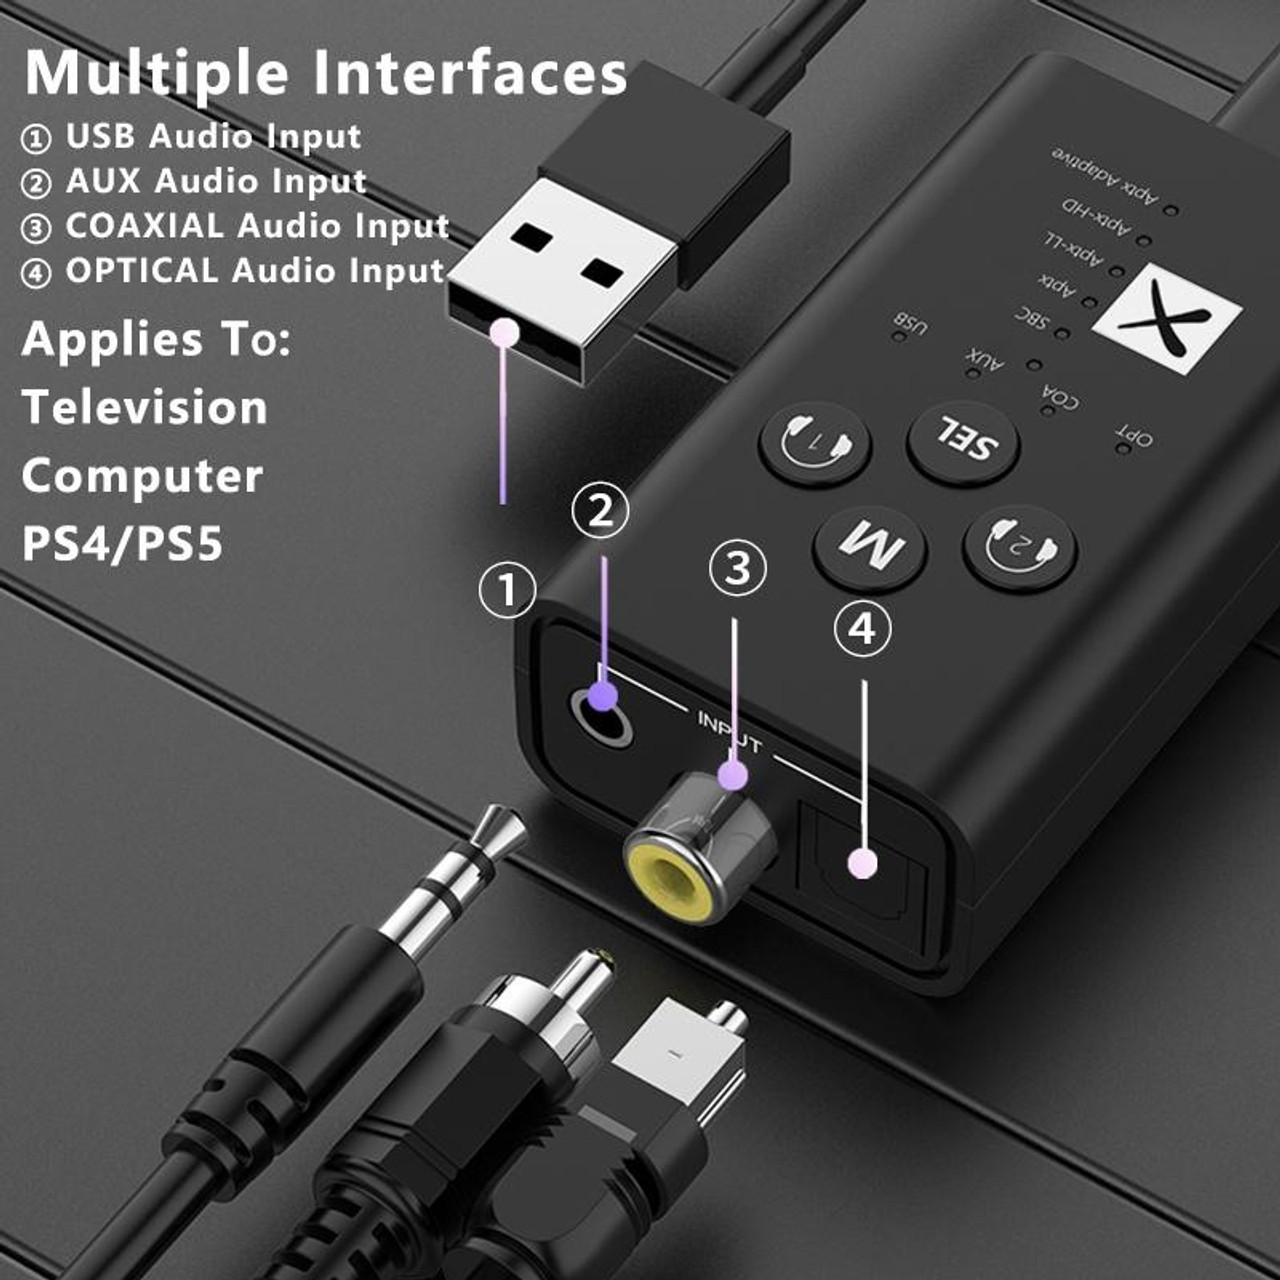 USB Dongle Bluetooth 5.2 Transmitter aptX / aptX HD / aptX LL